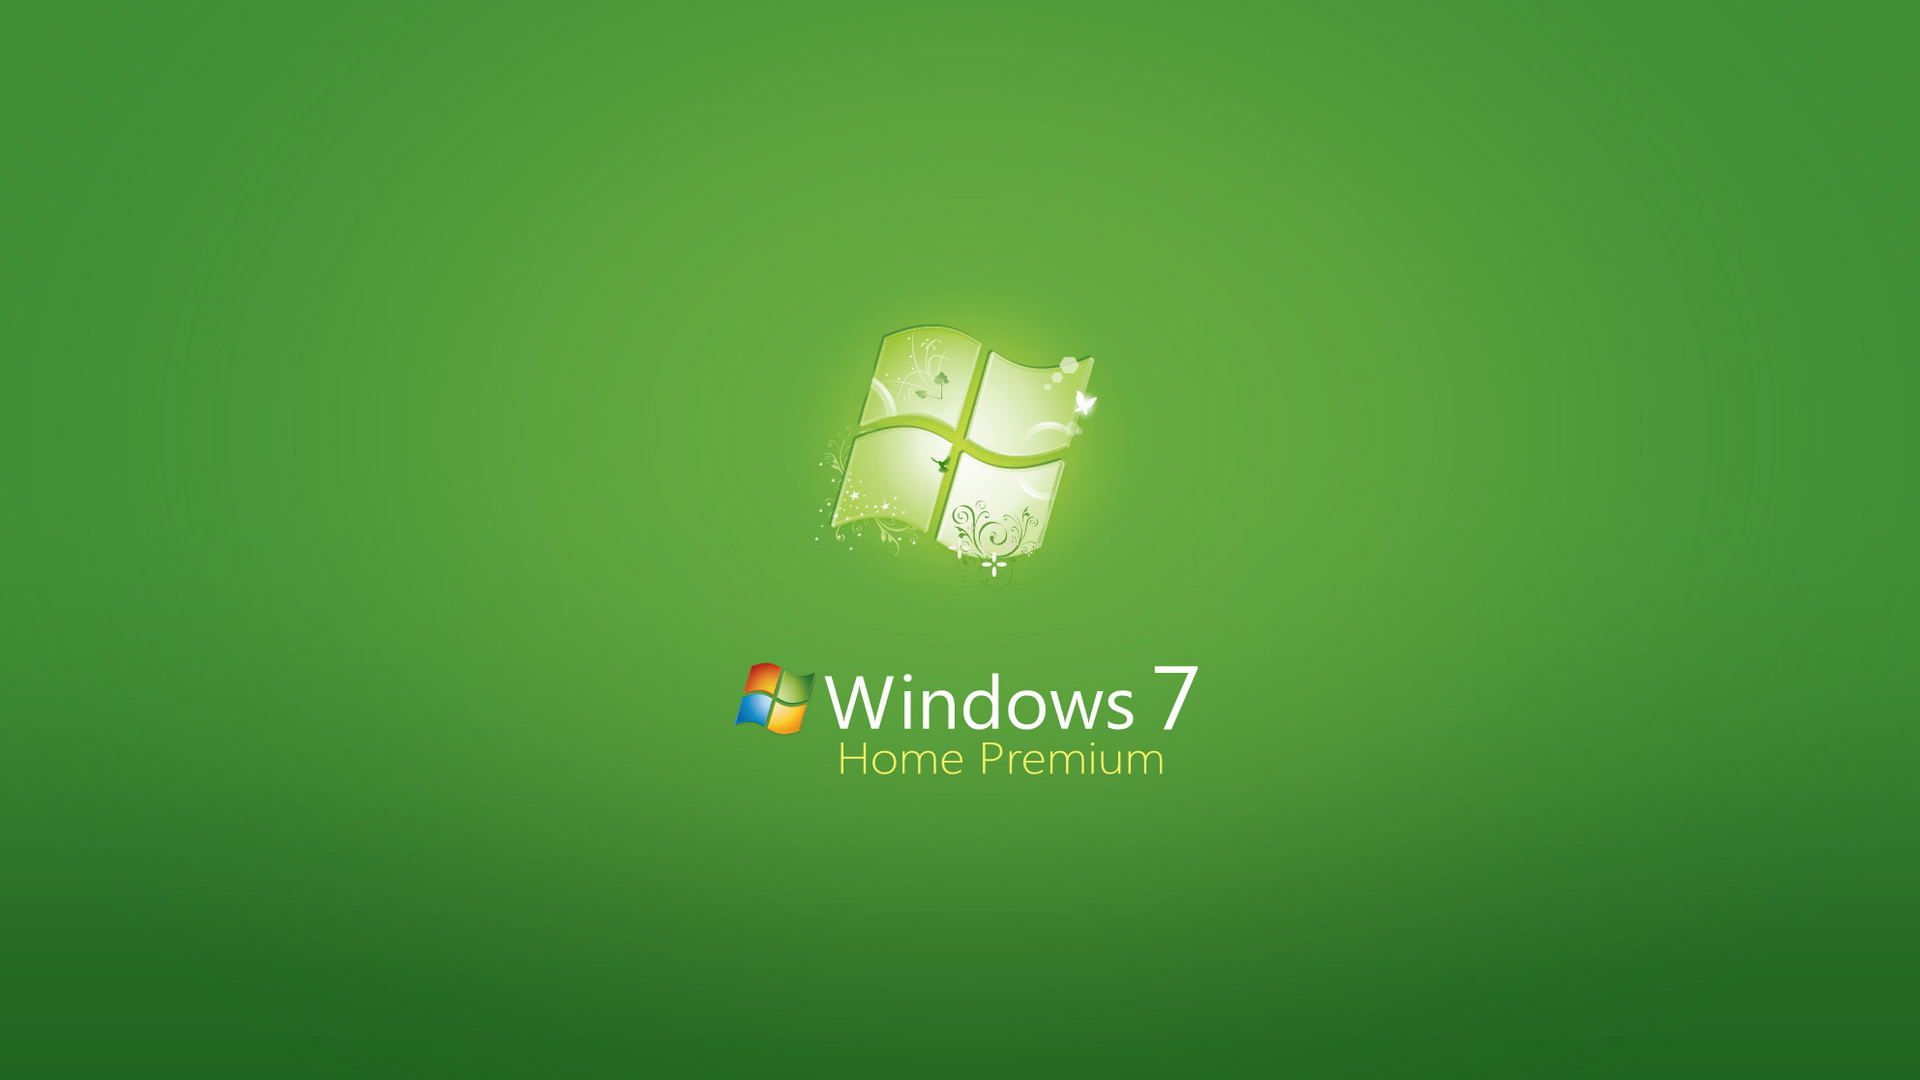 logos, windows, brands, background, green